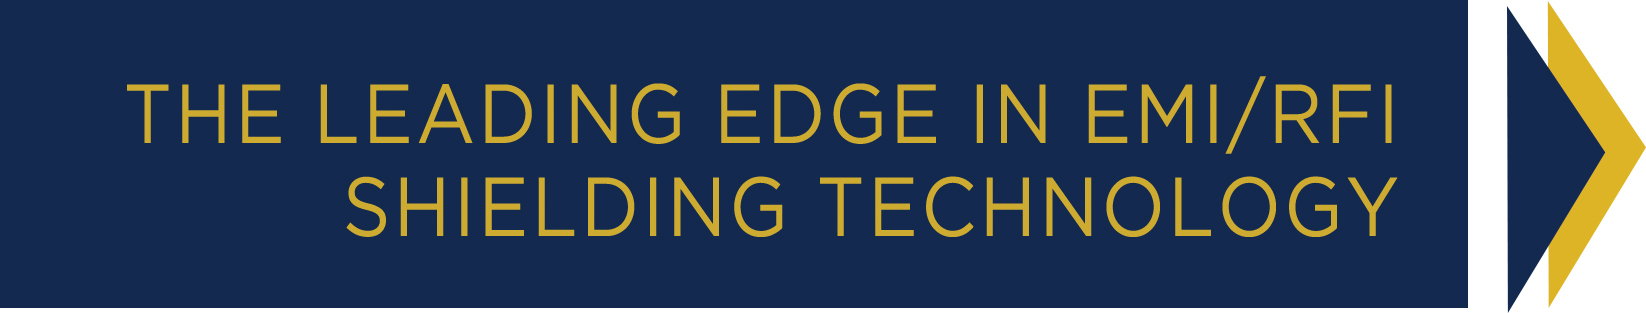 The leading edge in emi/rfi shielding technology typography